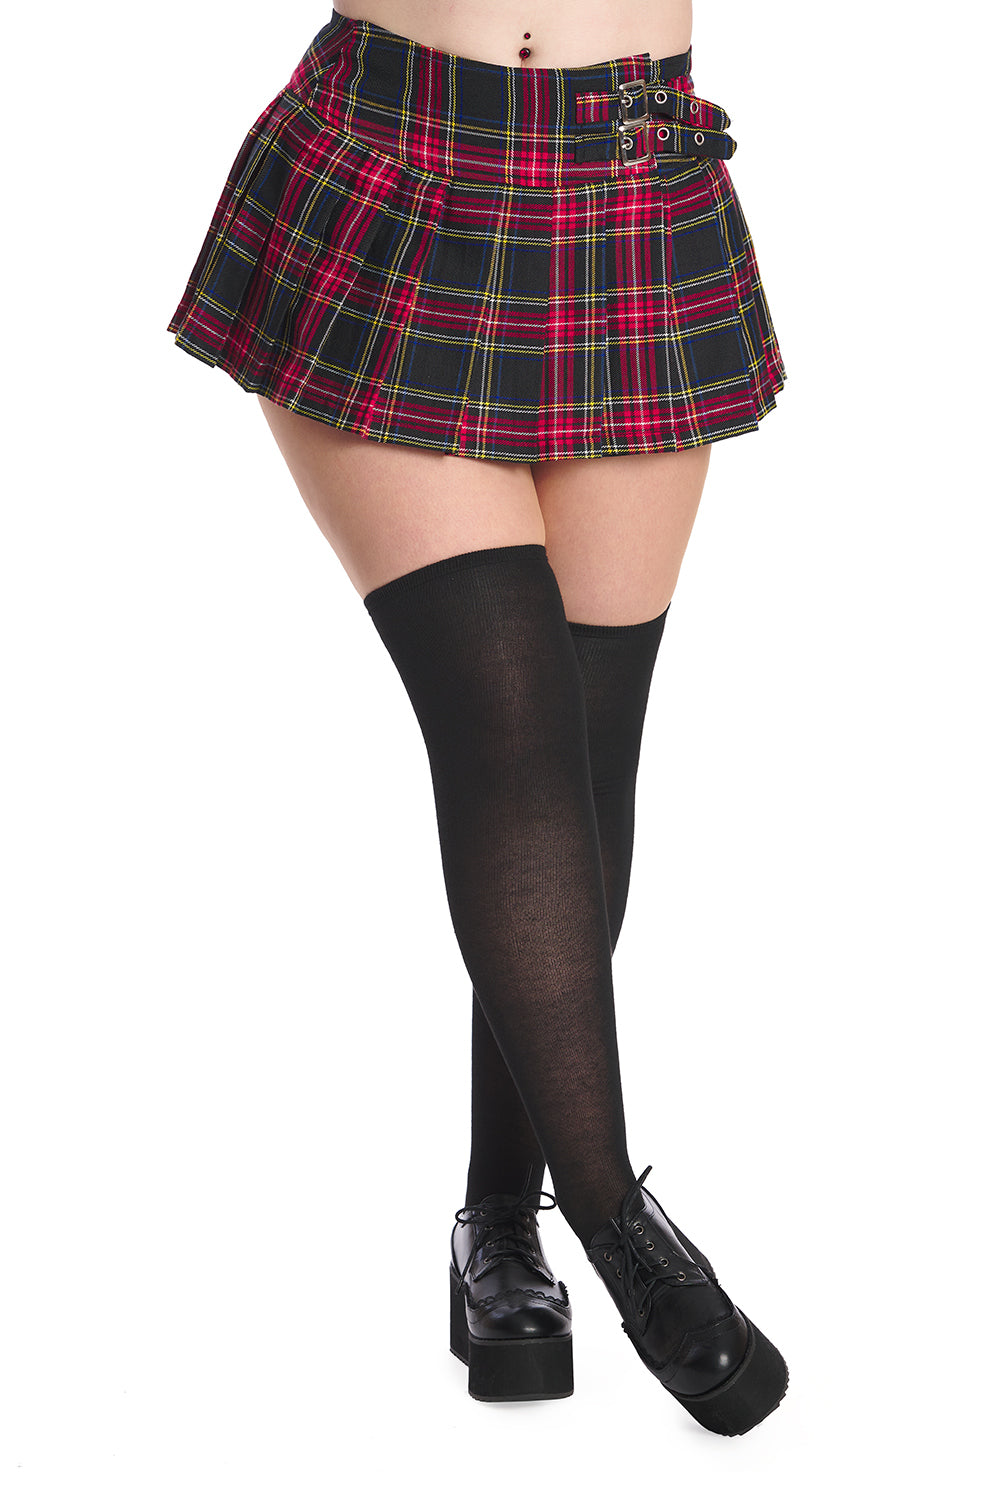 Banned Alternative Darkdoll Tartan Emo Mini Skirt